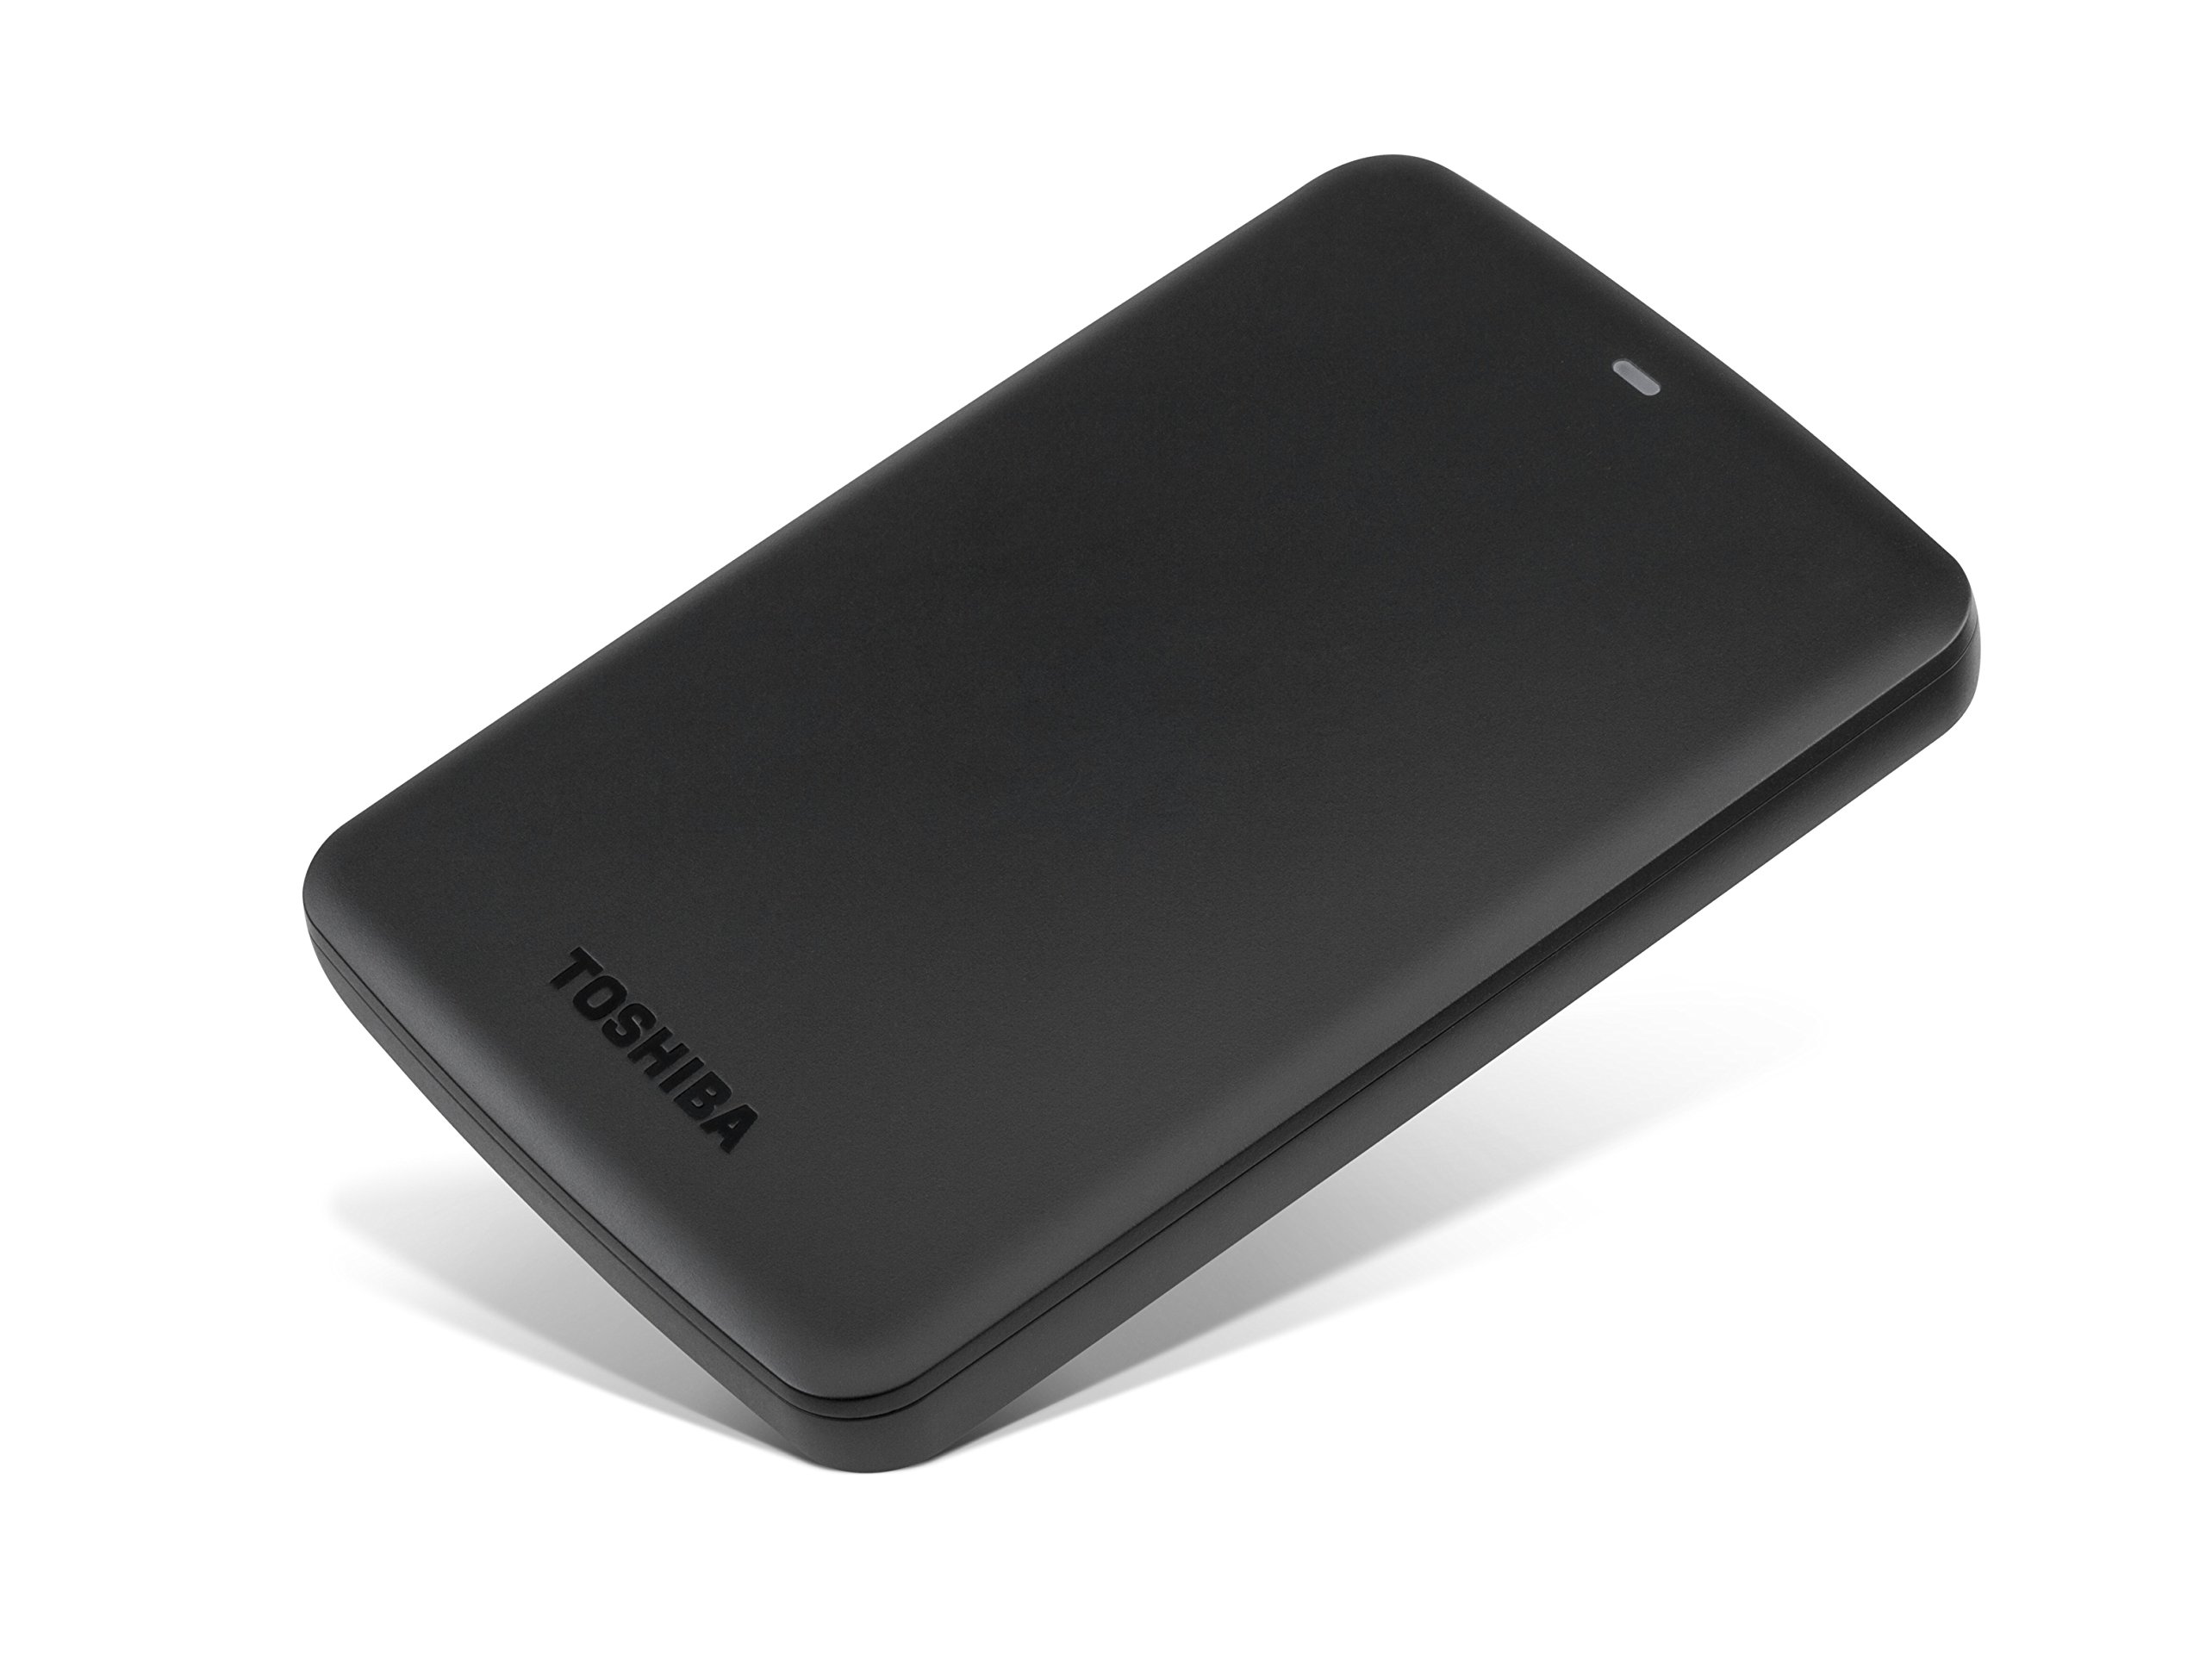 Toshiba Canvio Basics 1TB Portable Hard Drive - Black (HDTB310XK3AA)